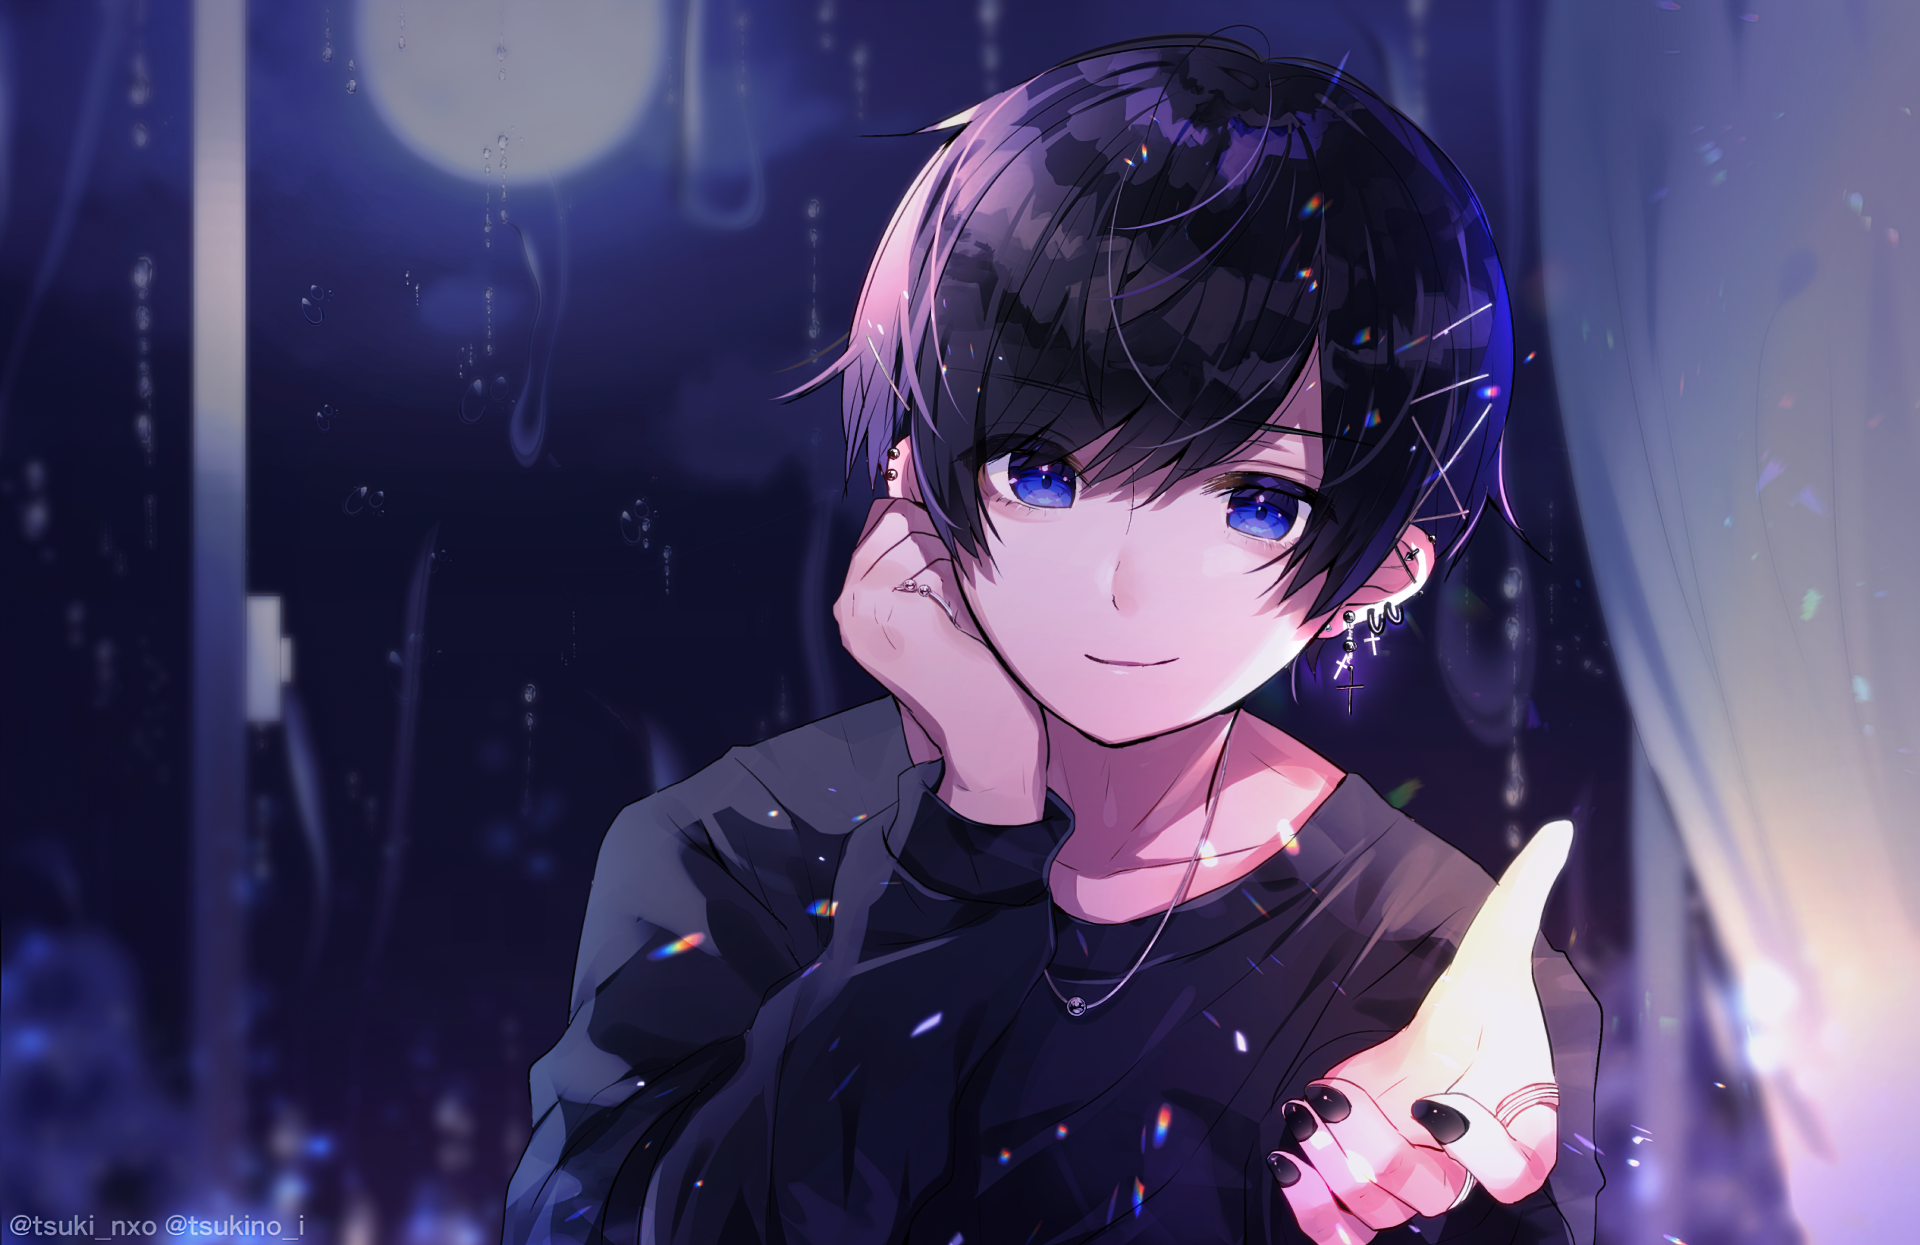 Moody Anime Boy Profile - Anime Pfp 4k Highlights (@pfp)